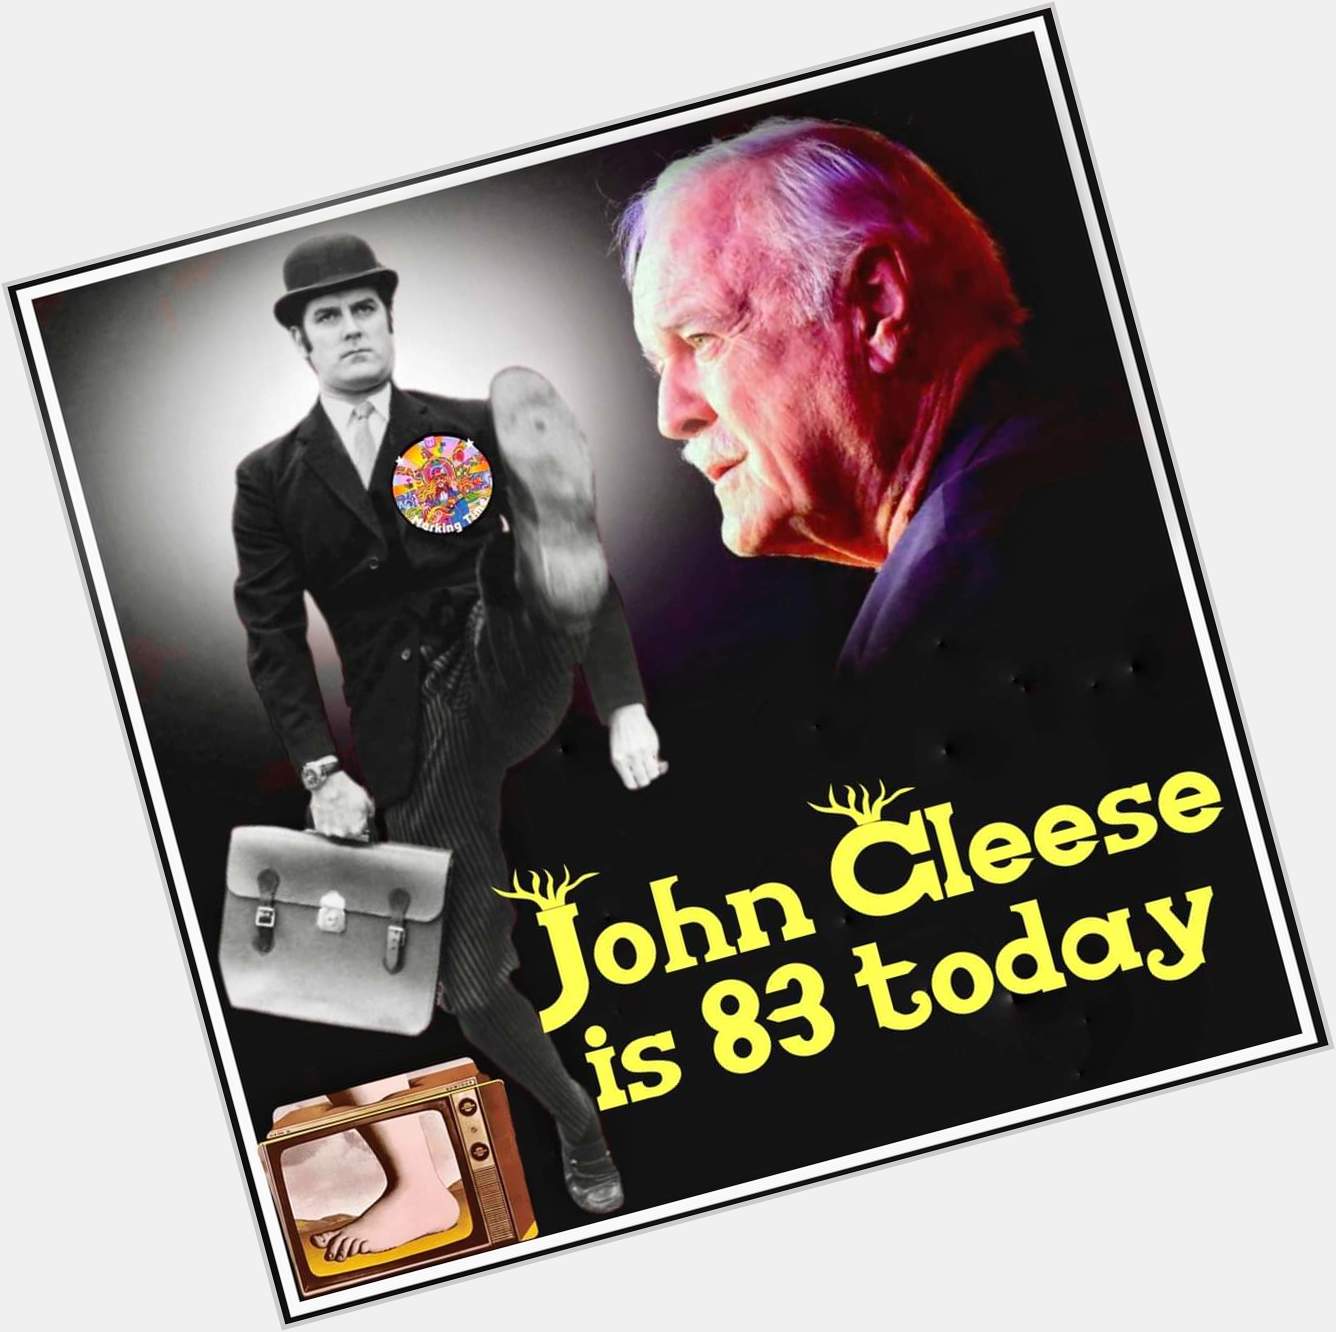 Happy birthday to John Cleese 